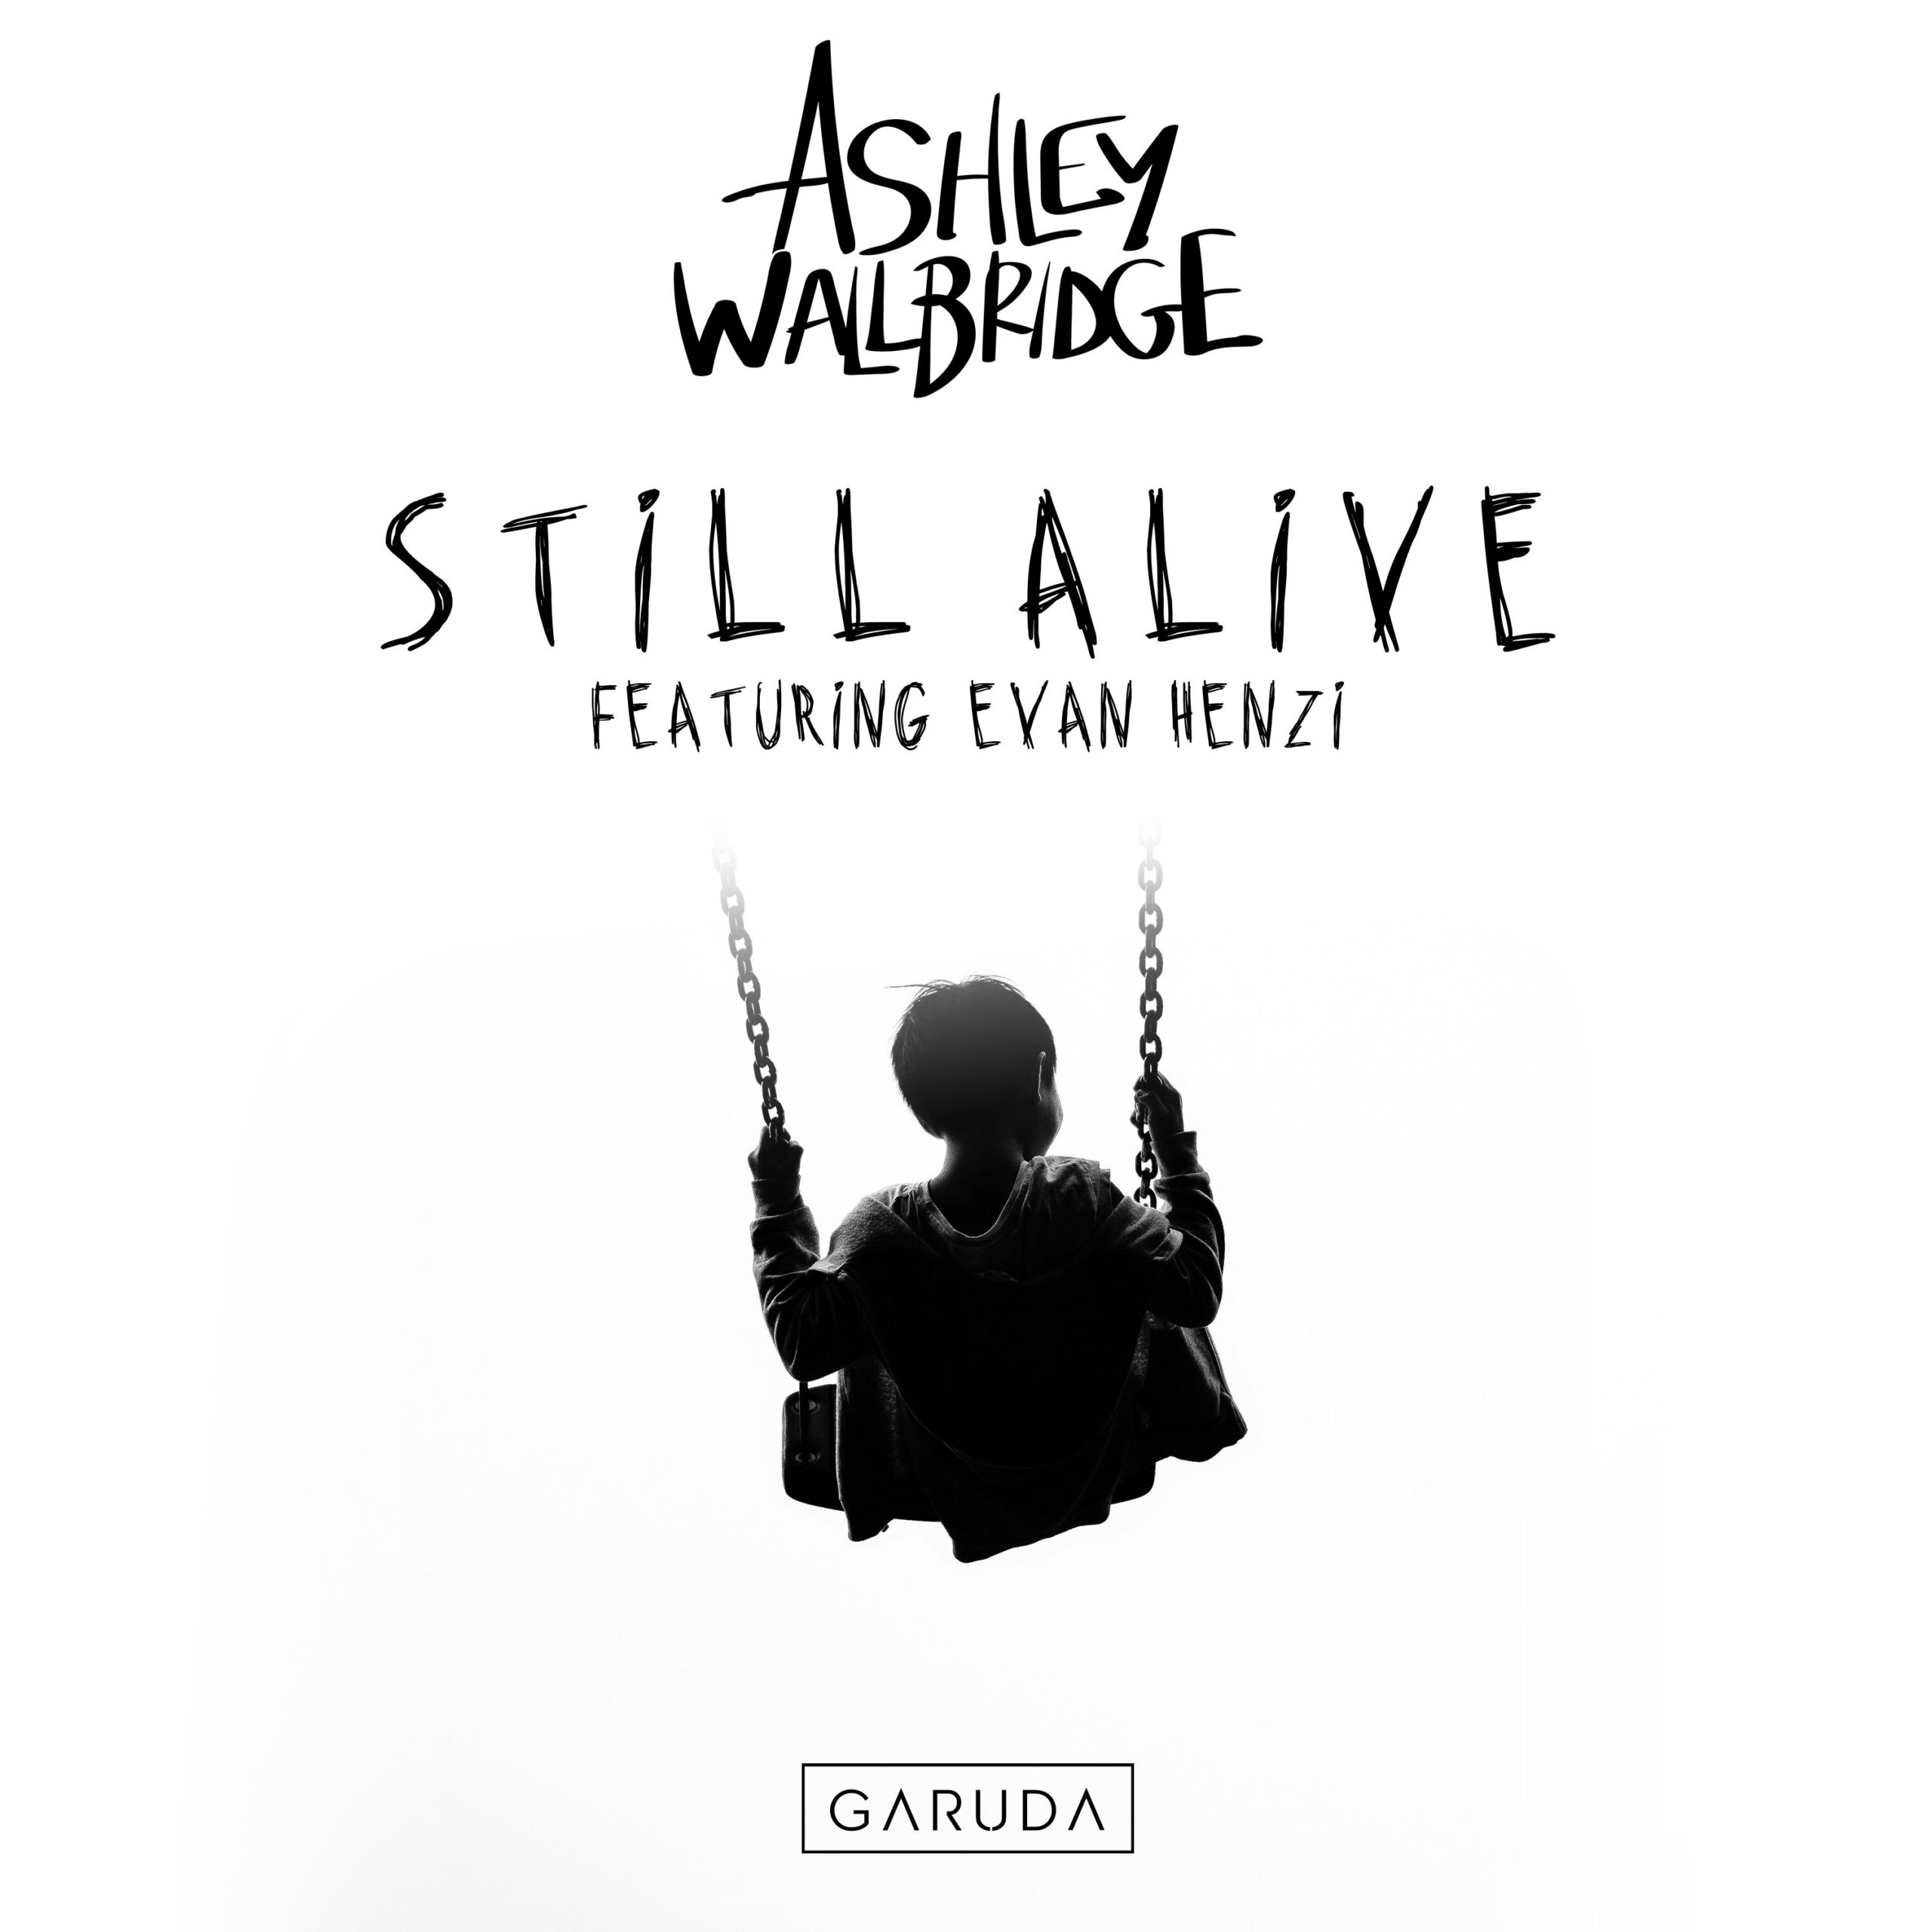 Ashley Wallbridge feat. Evan Henzi presents Still Alive on Garuda